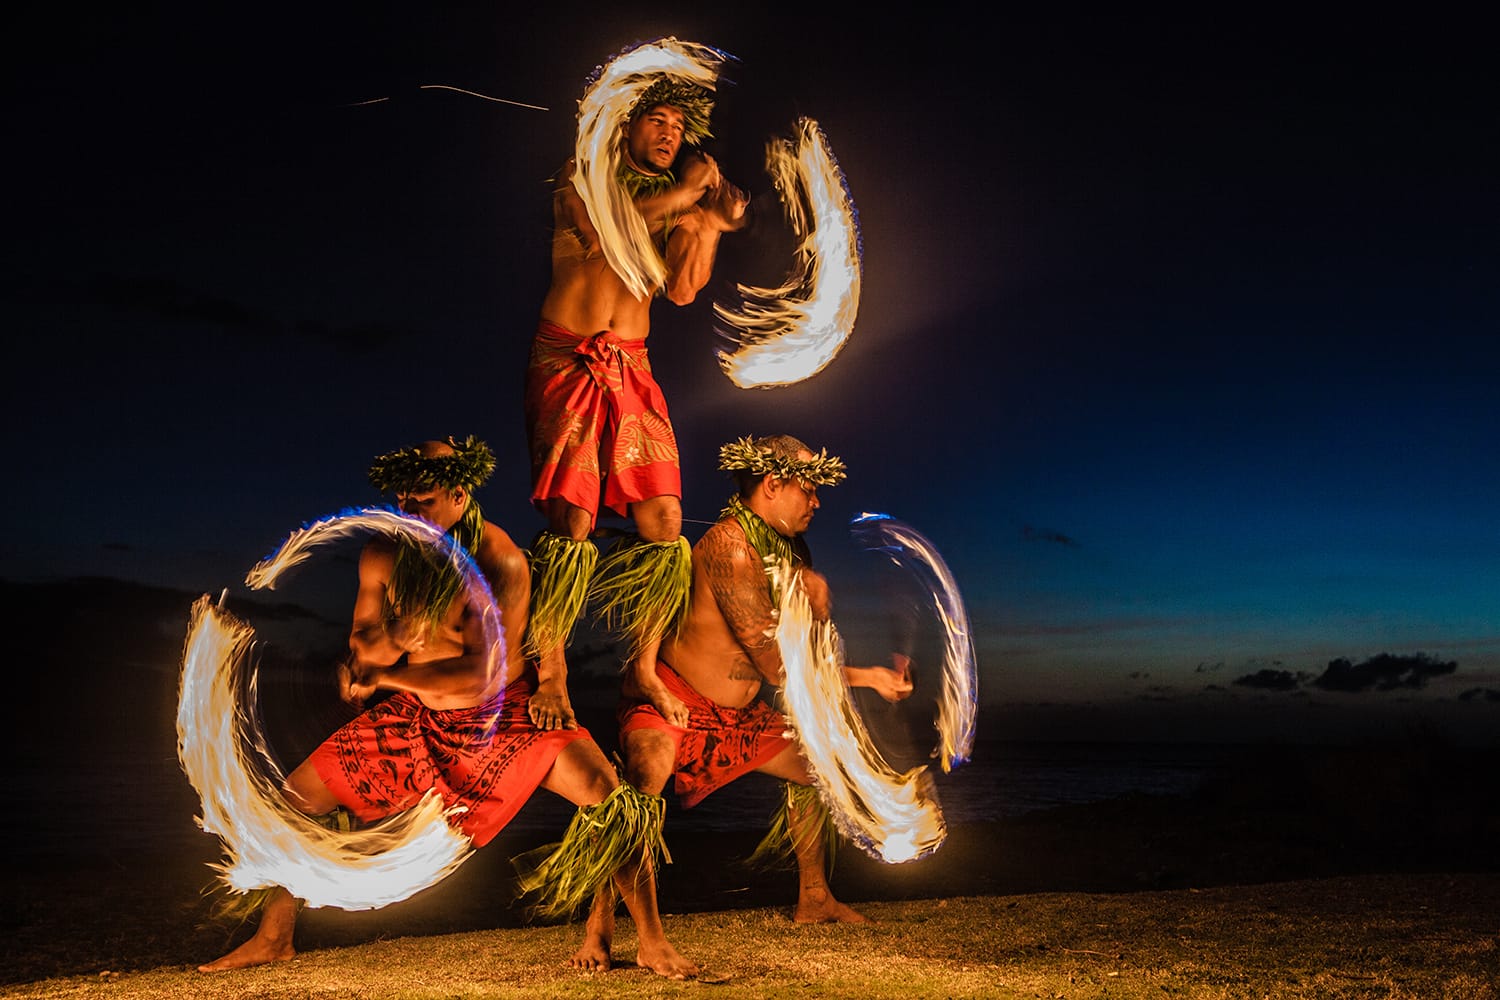 Three fire dancers juggling fire in Hawaii